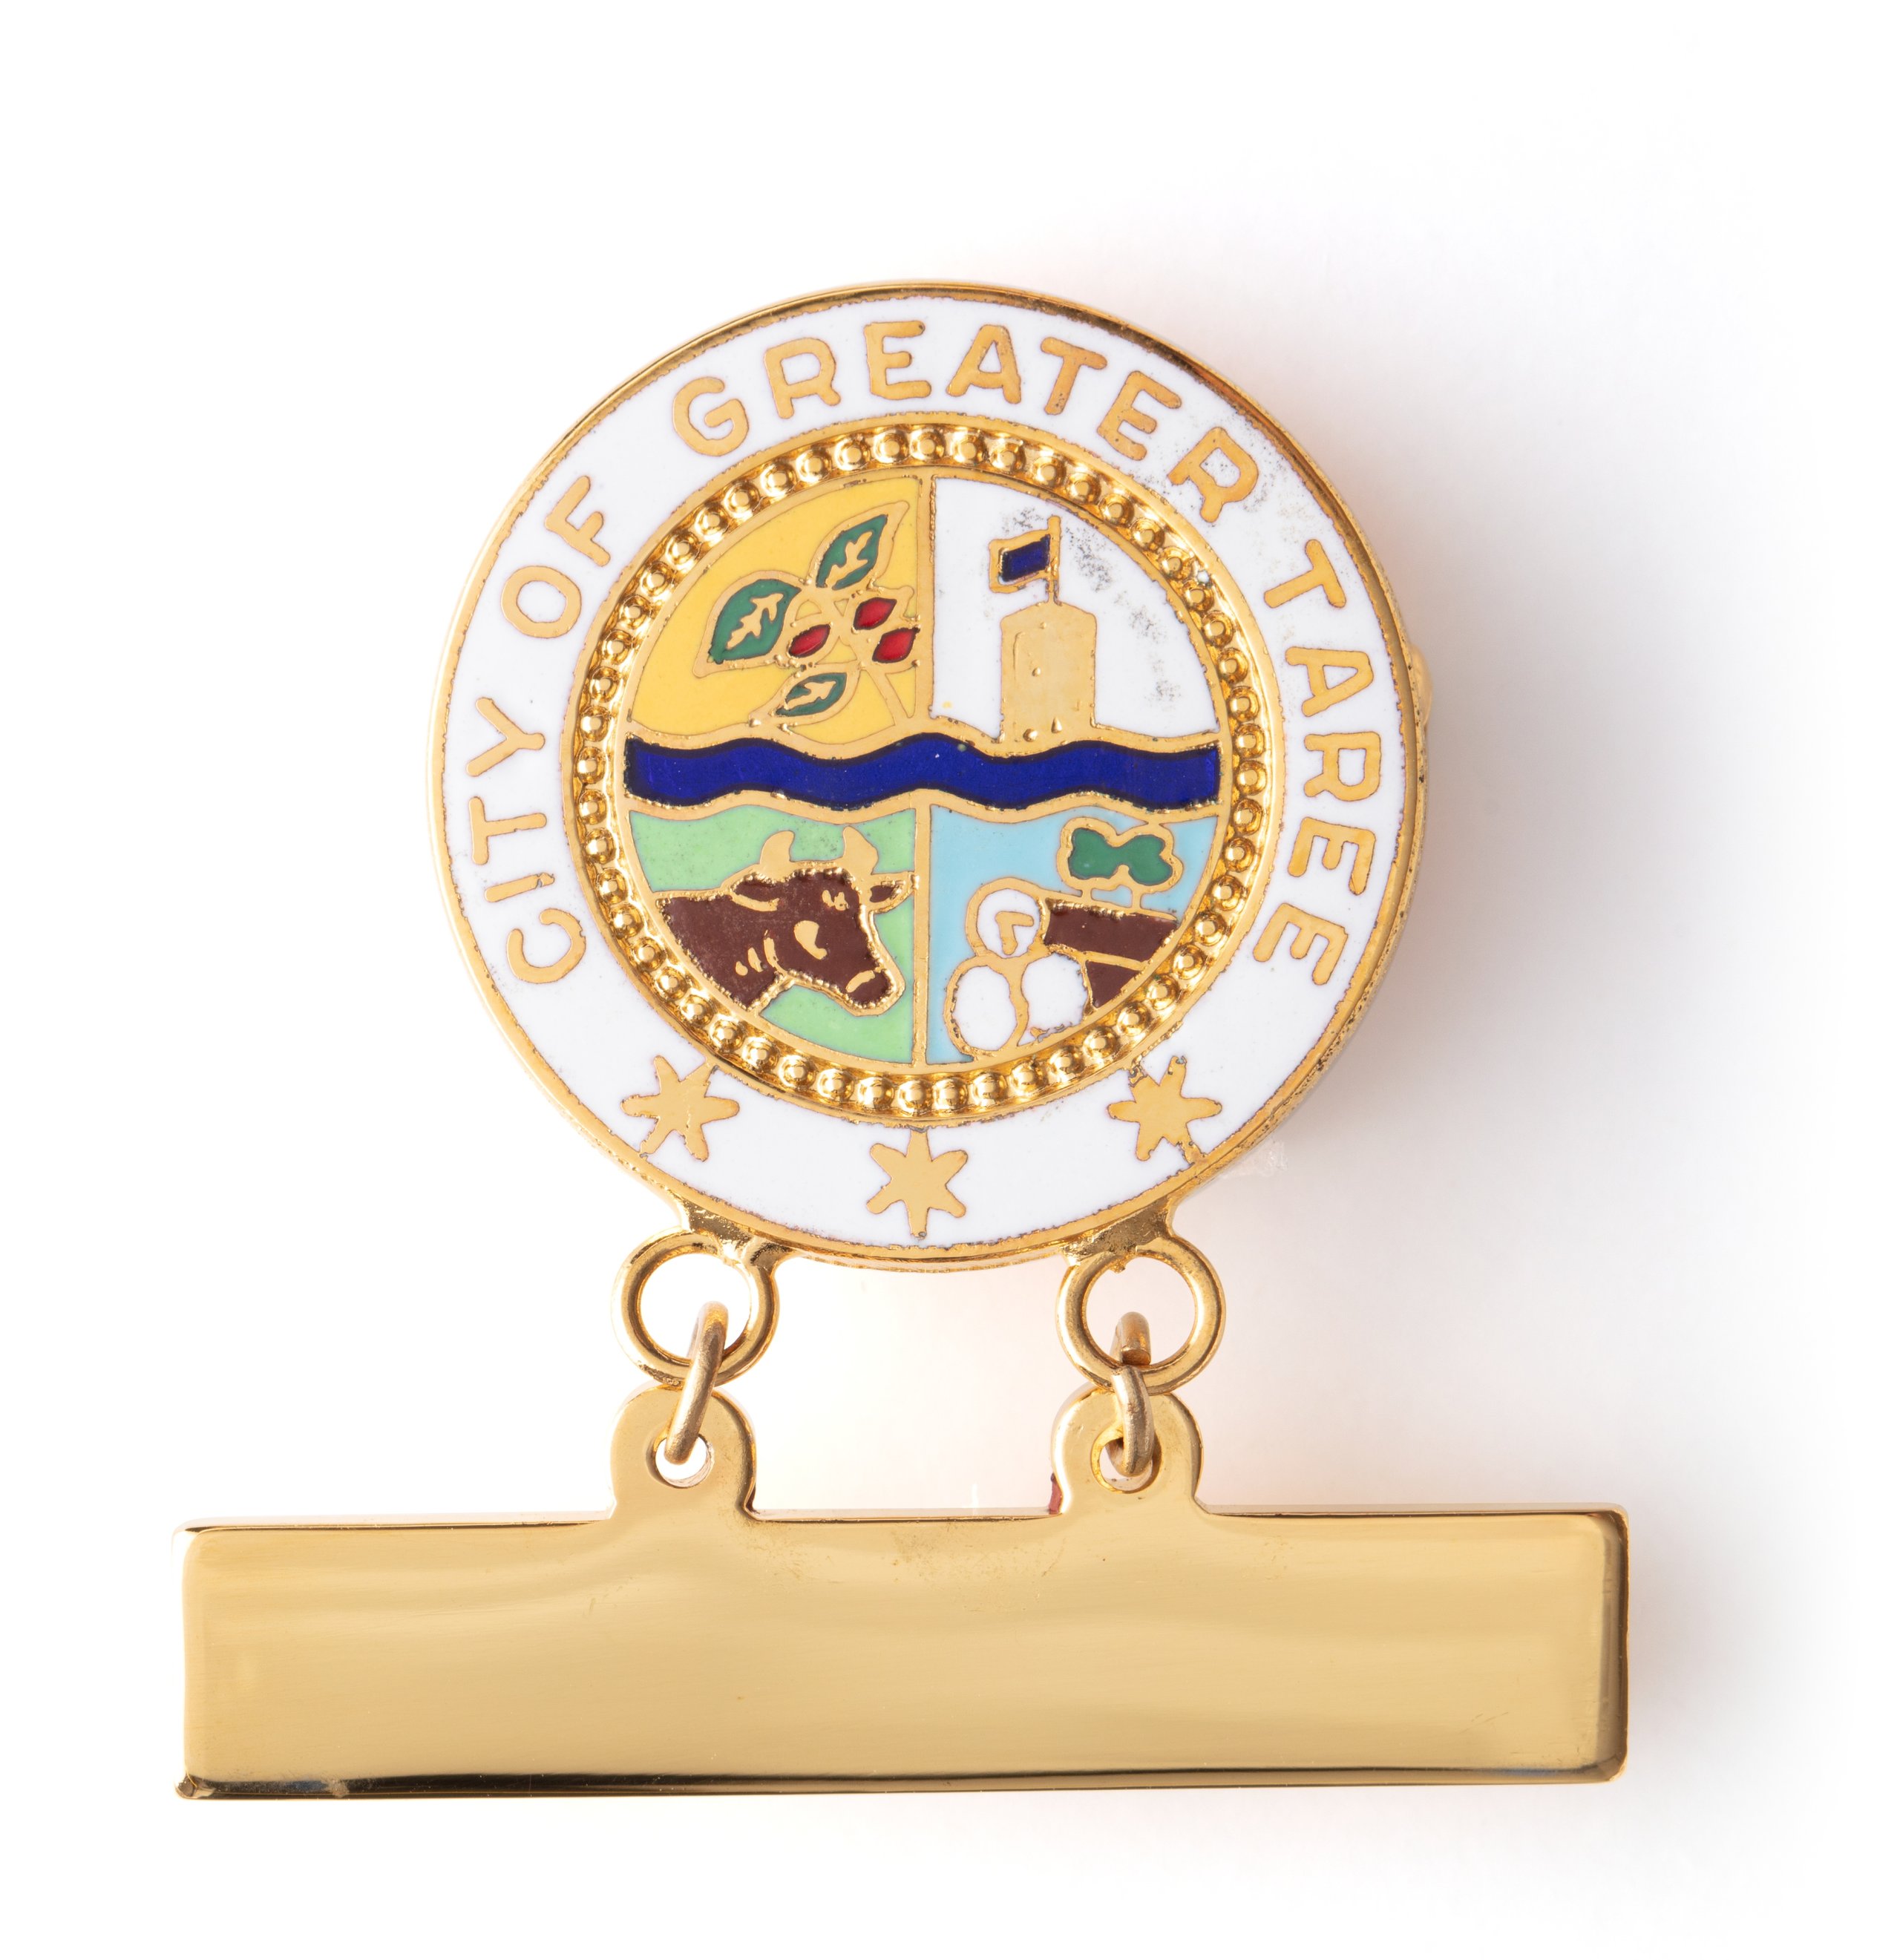 'City of Greater Taree' badge